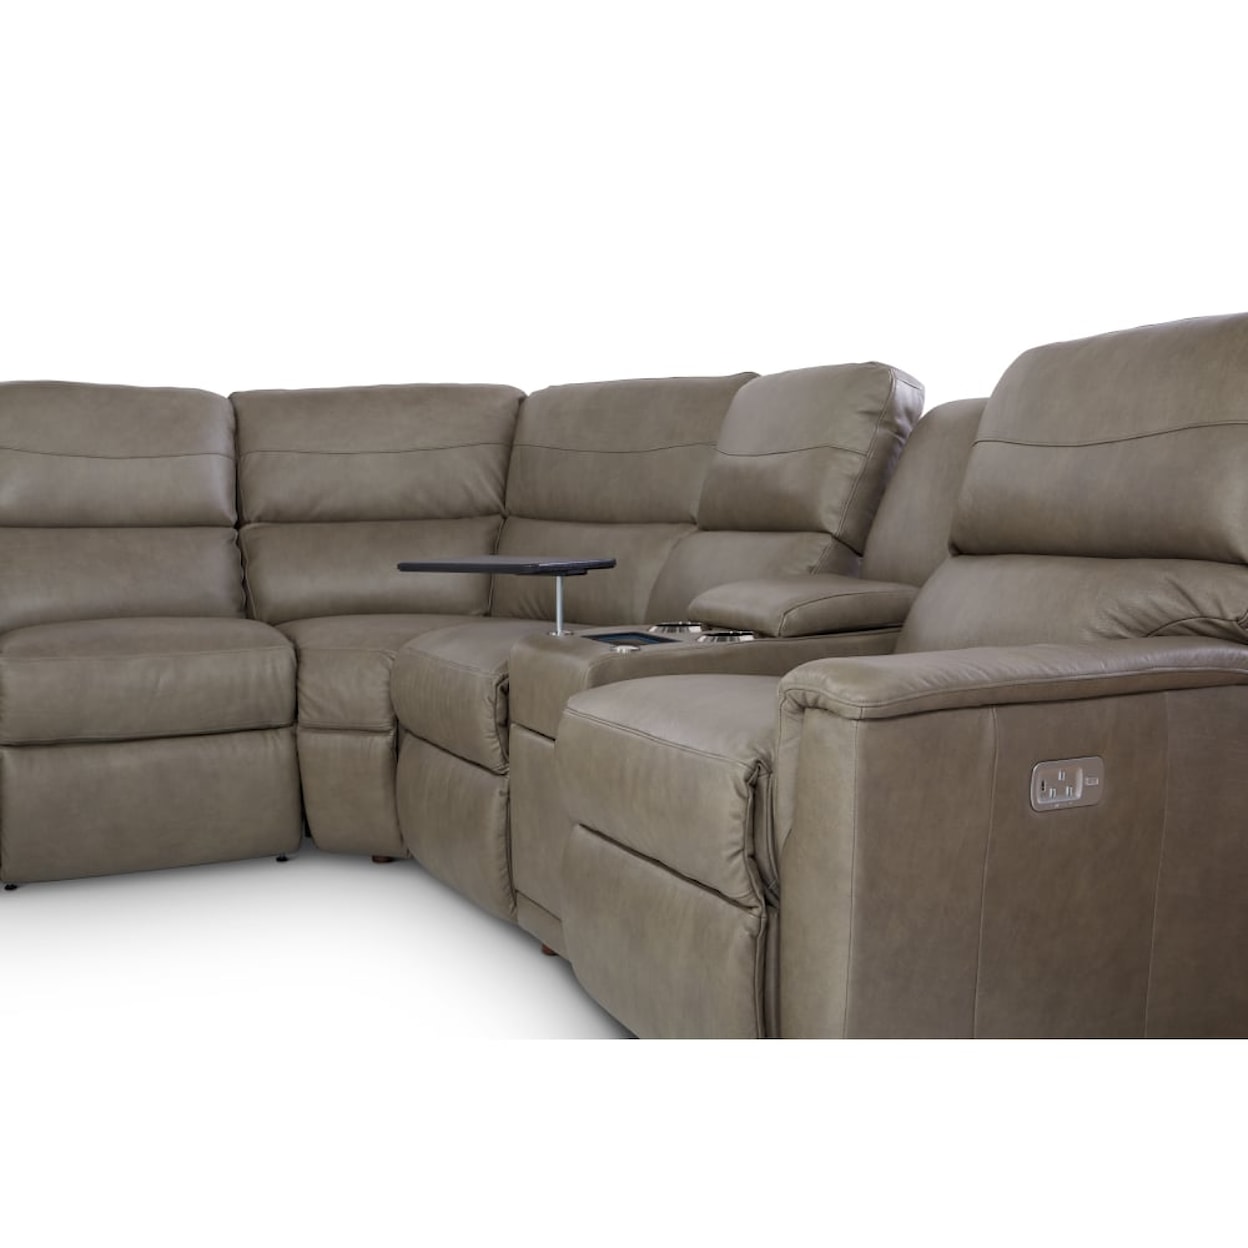 La-Z-Boy Ava 5-Seat Reclining Sectional Sofa